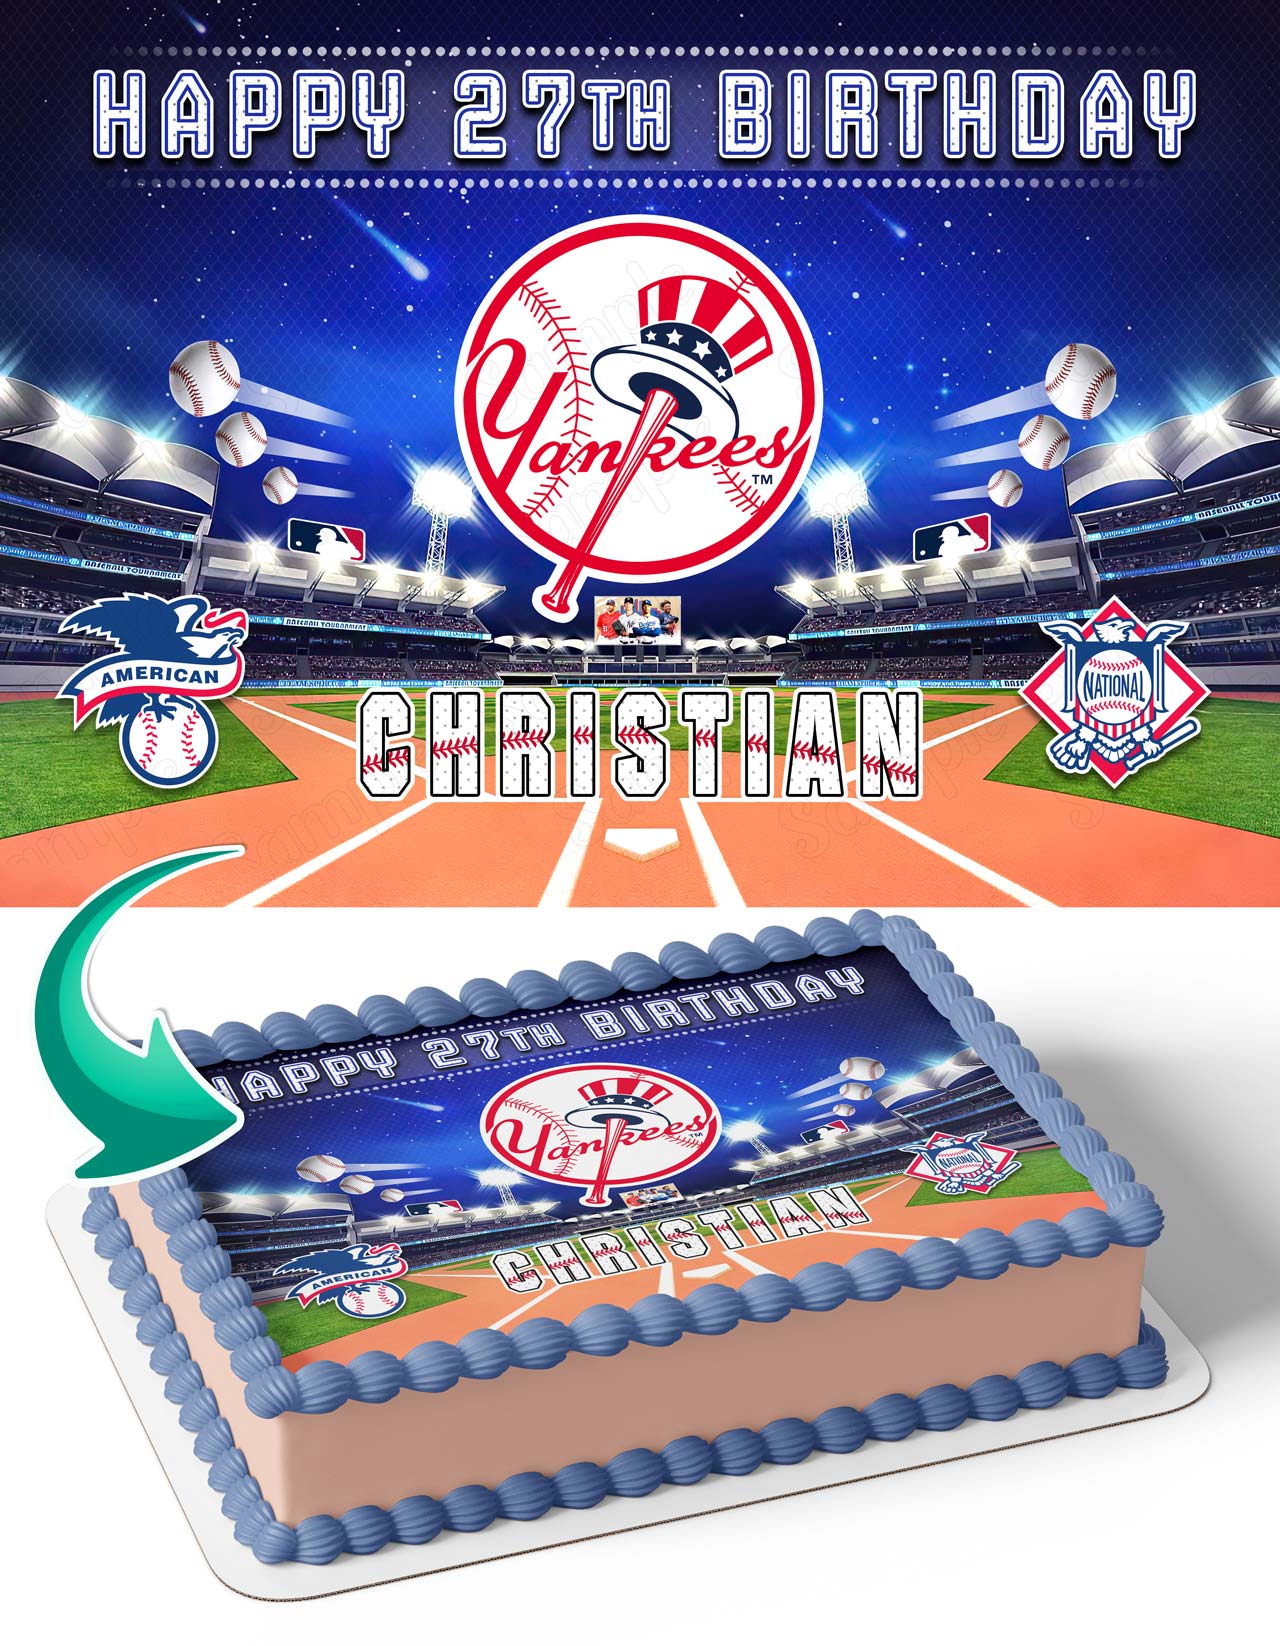 NY Yankees Cake